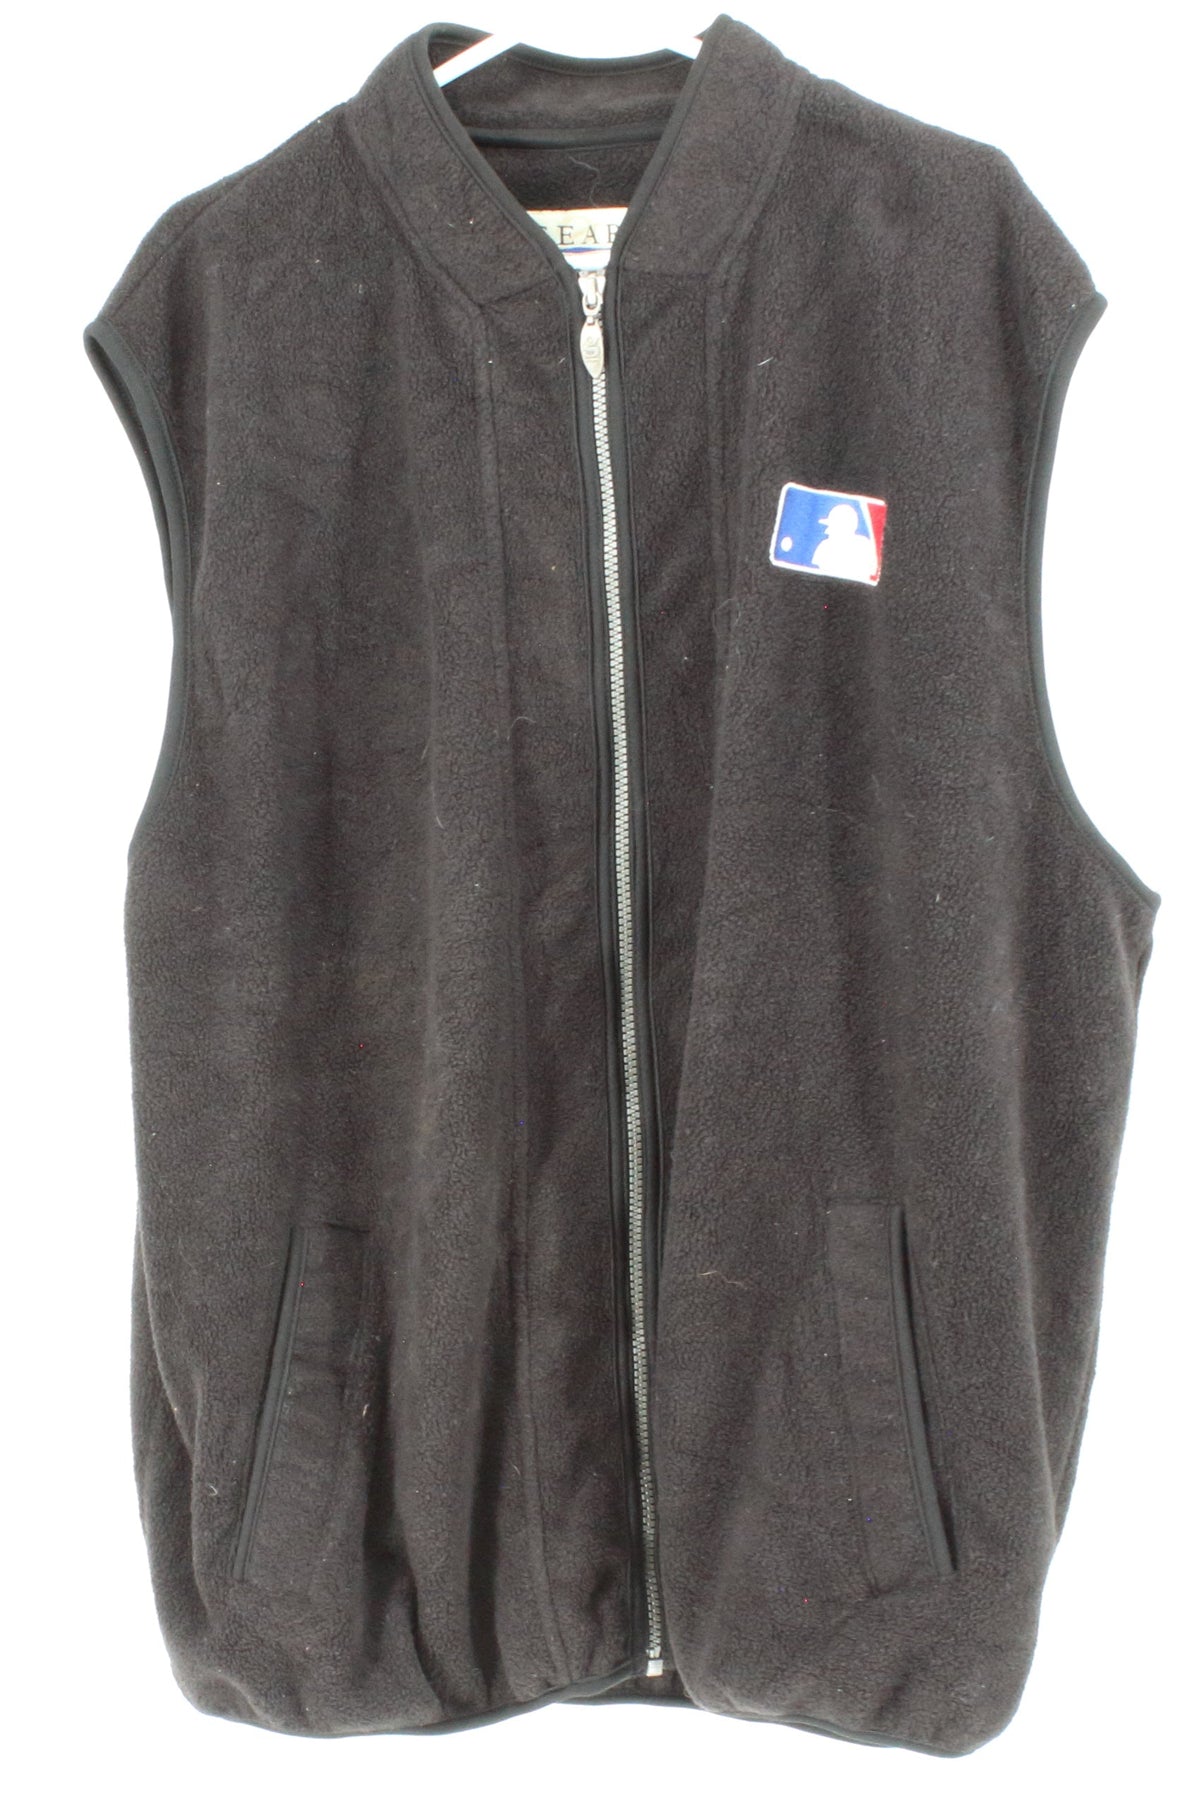 Gear For Sports Baseball Logo Fleece Sleeve Less Black Zip -Up Vest